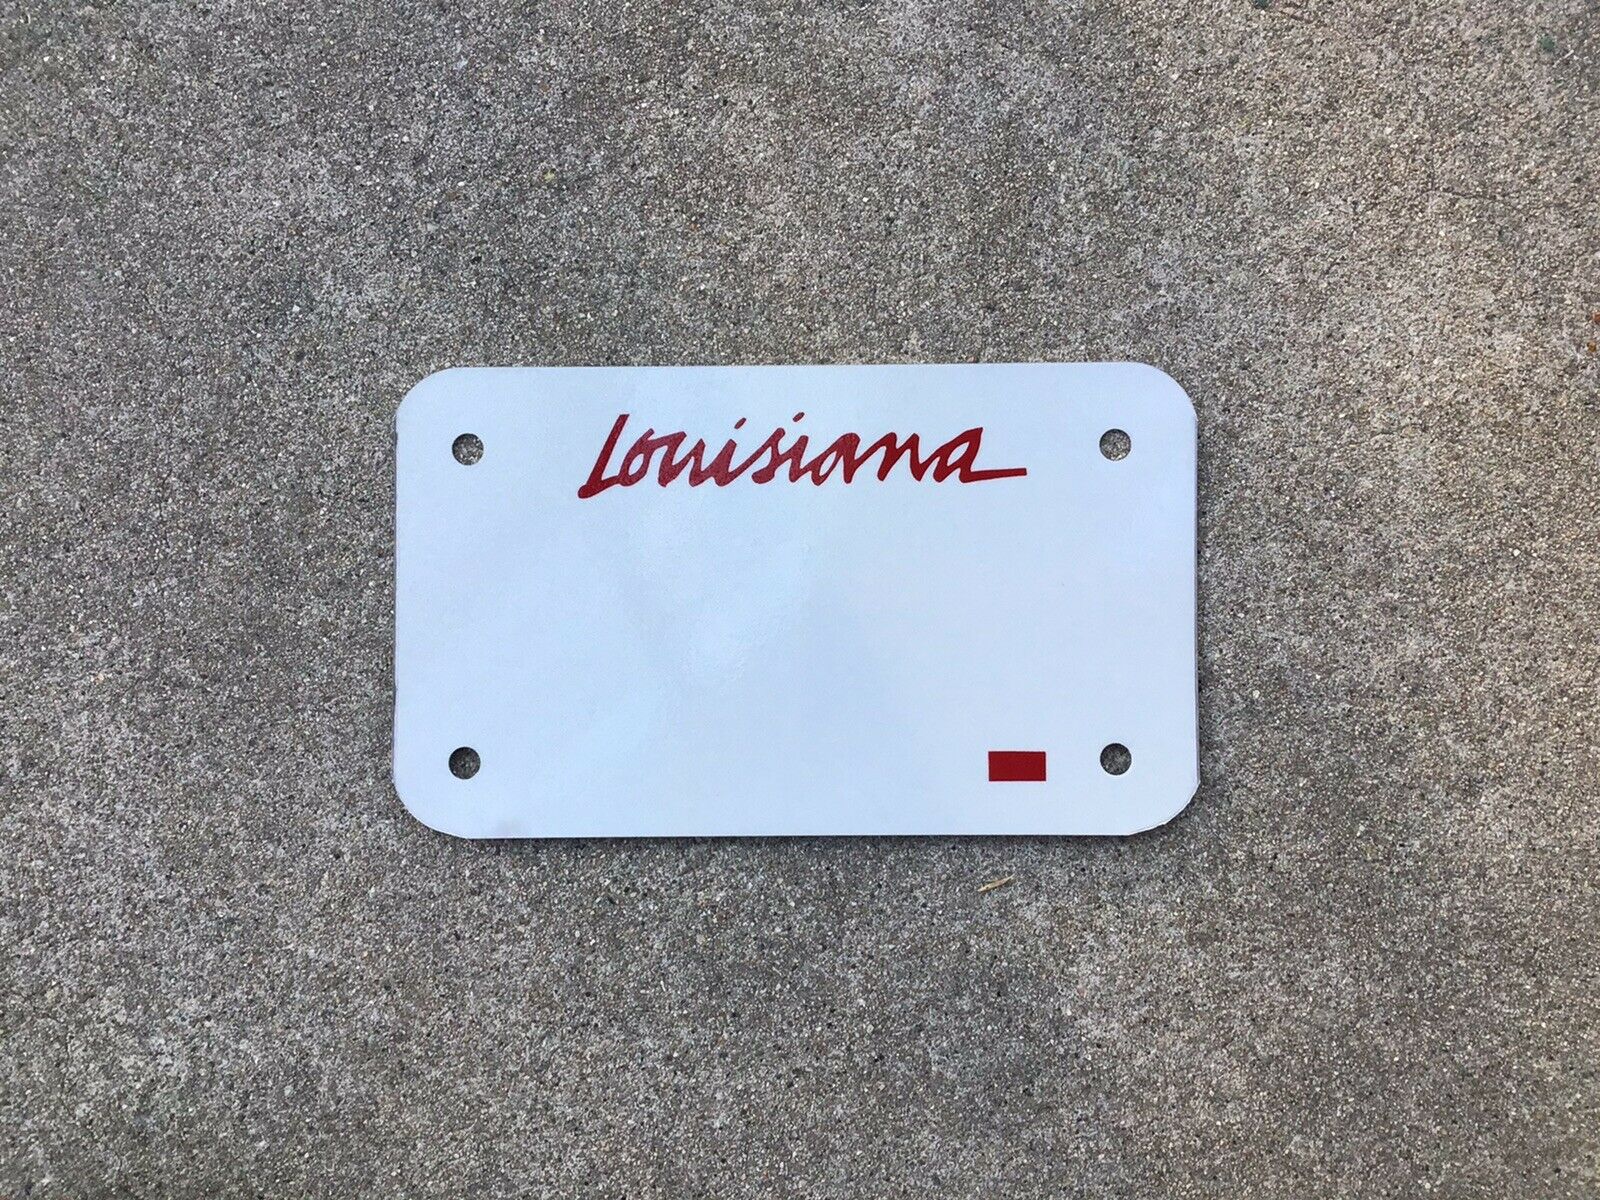 Louisiana - Motorcycle - License Plate - Blank